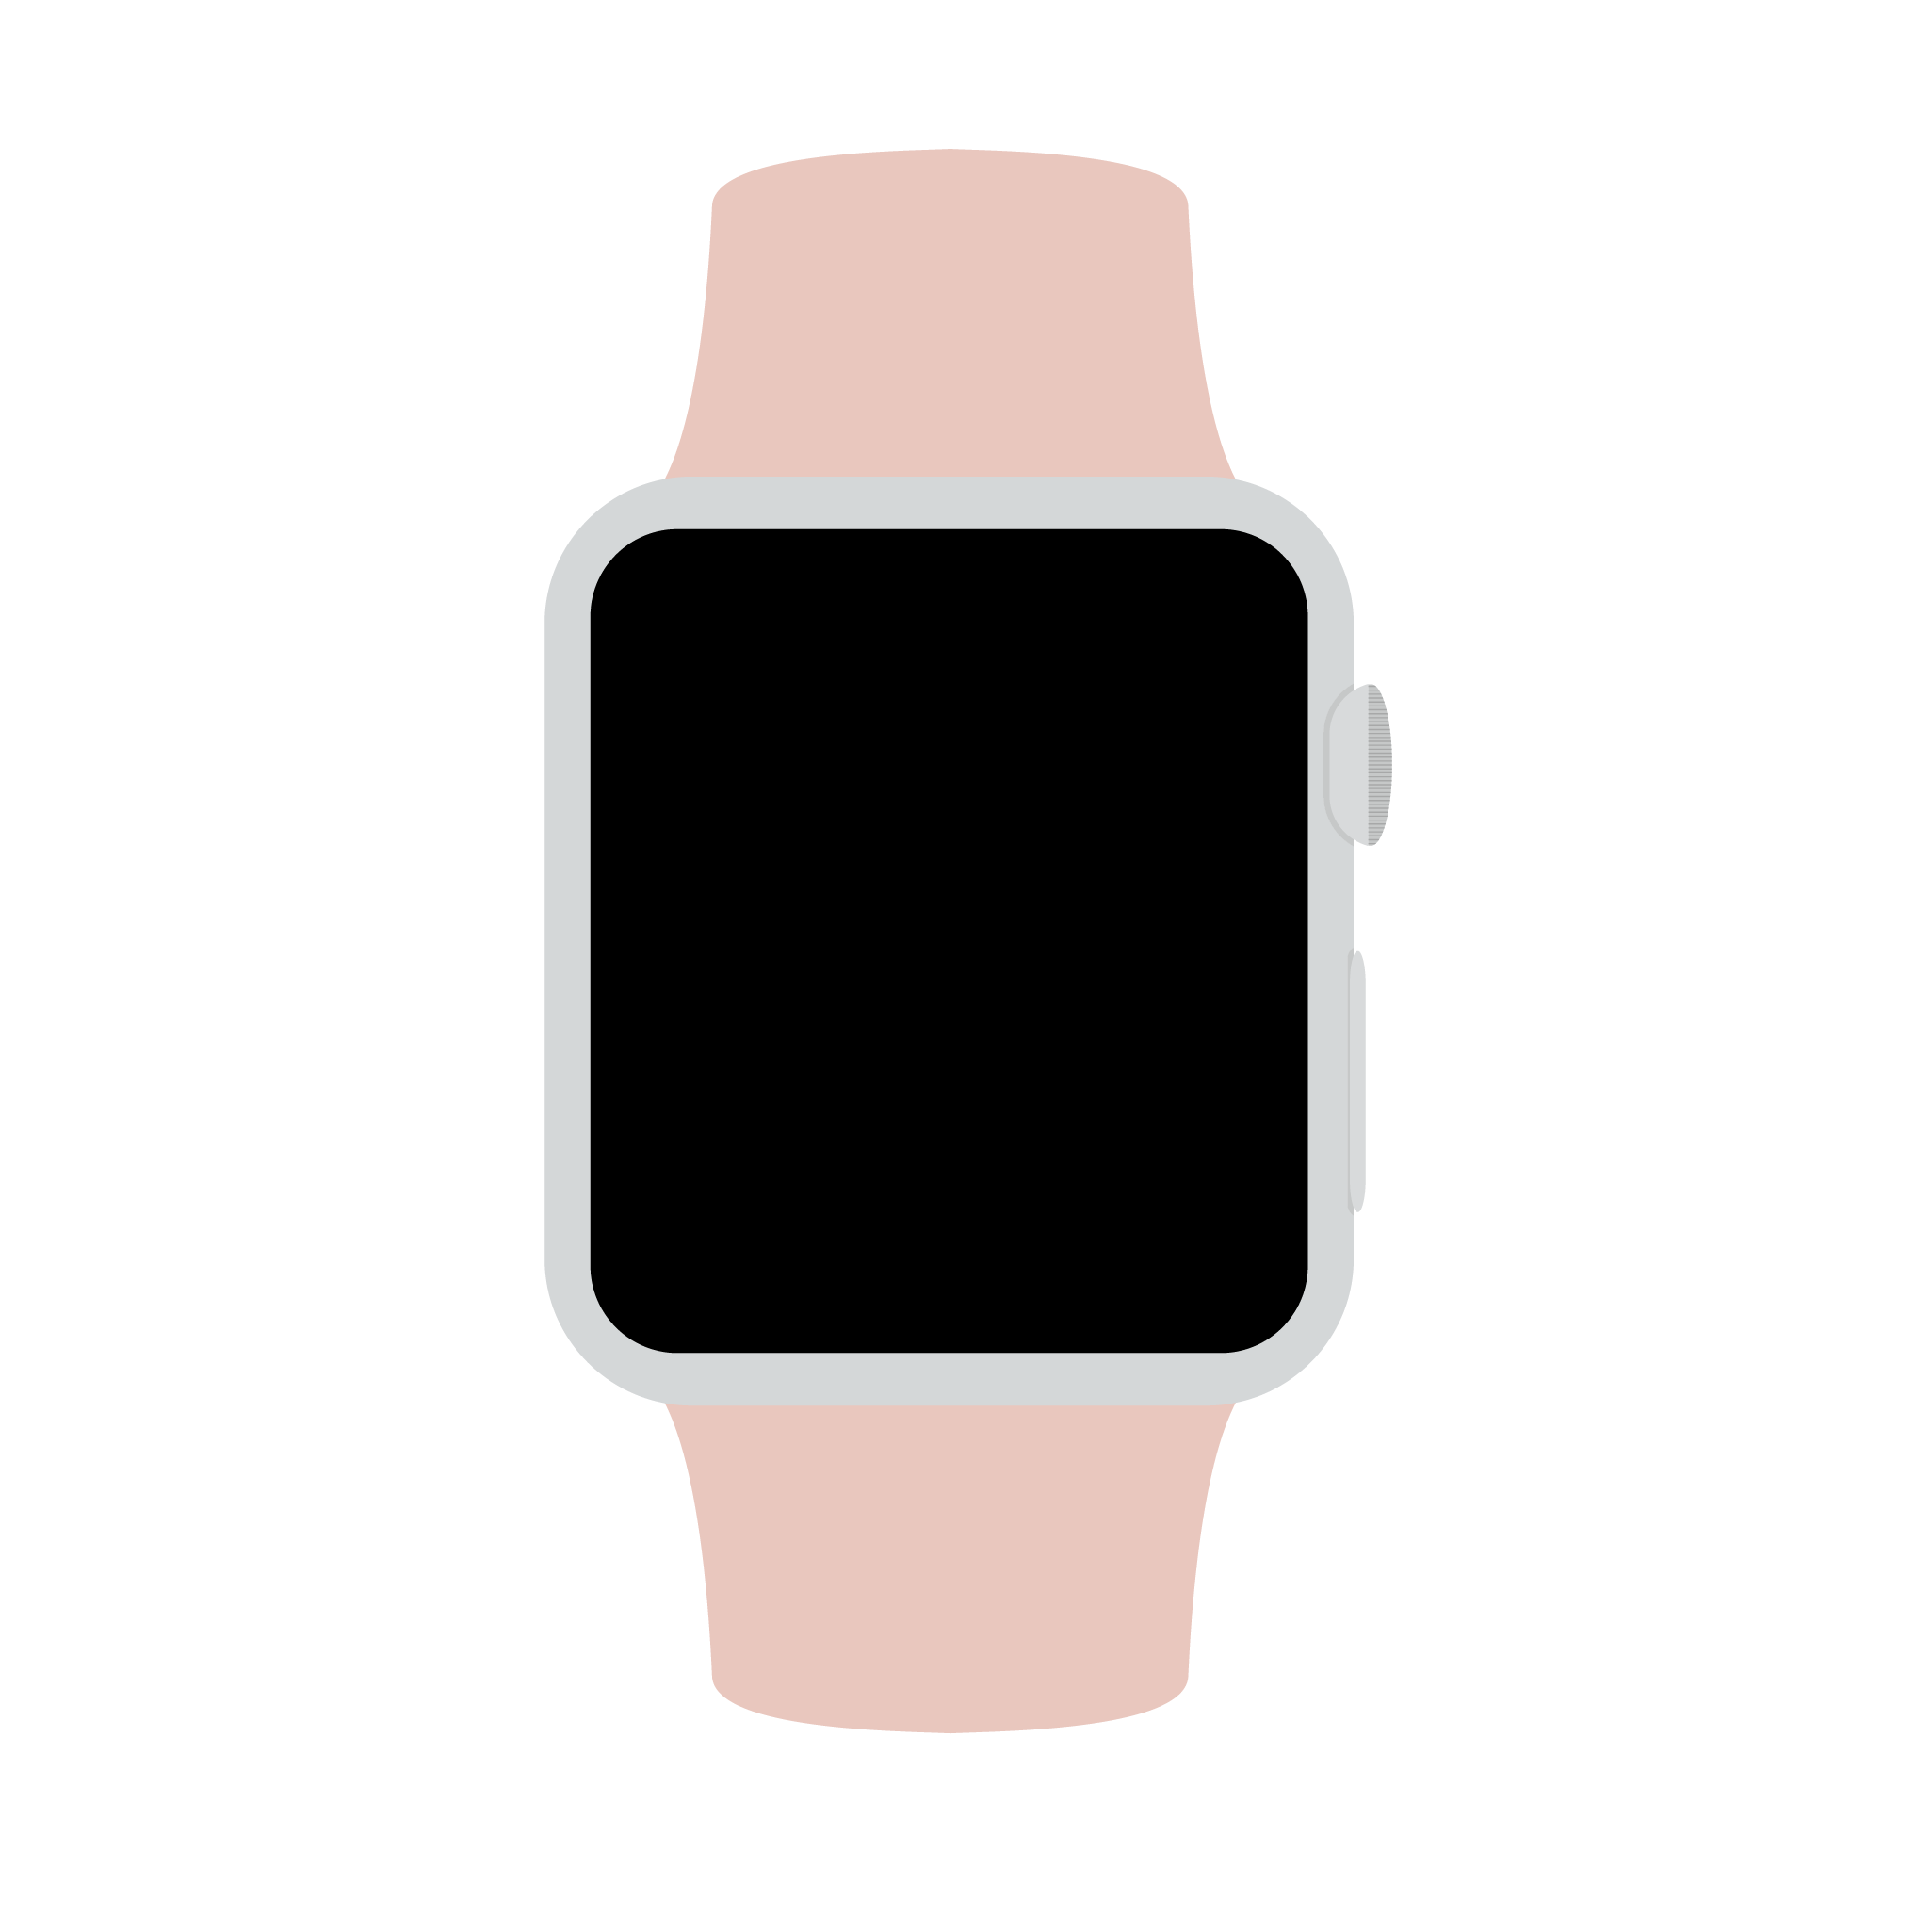 Pink watch illustration